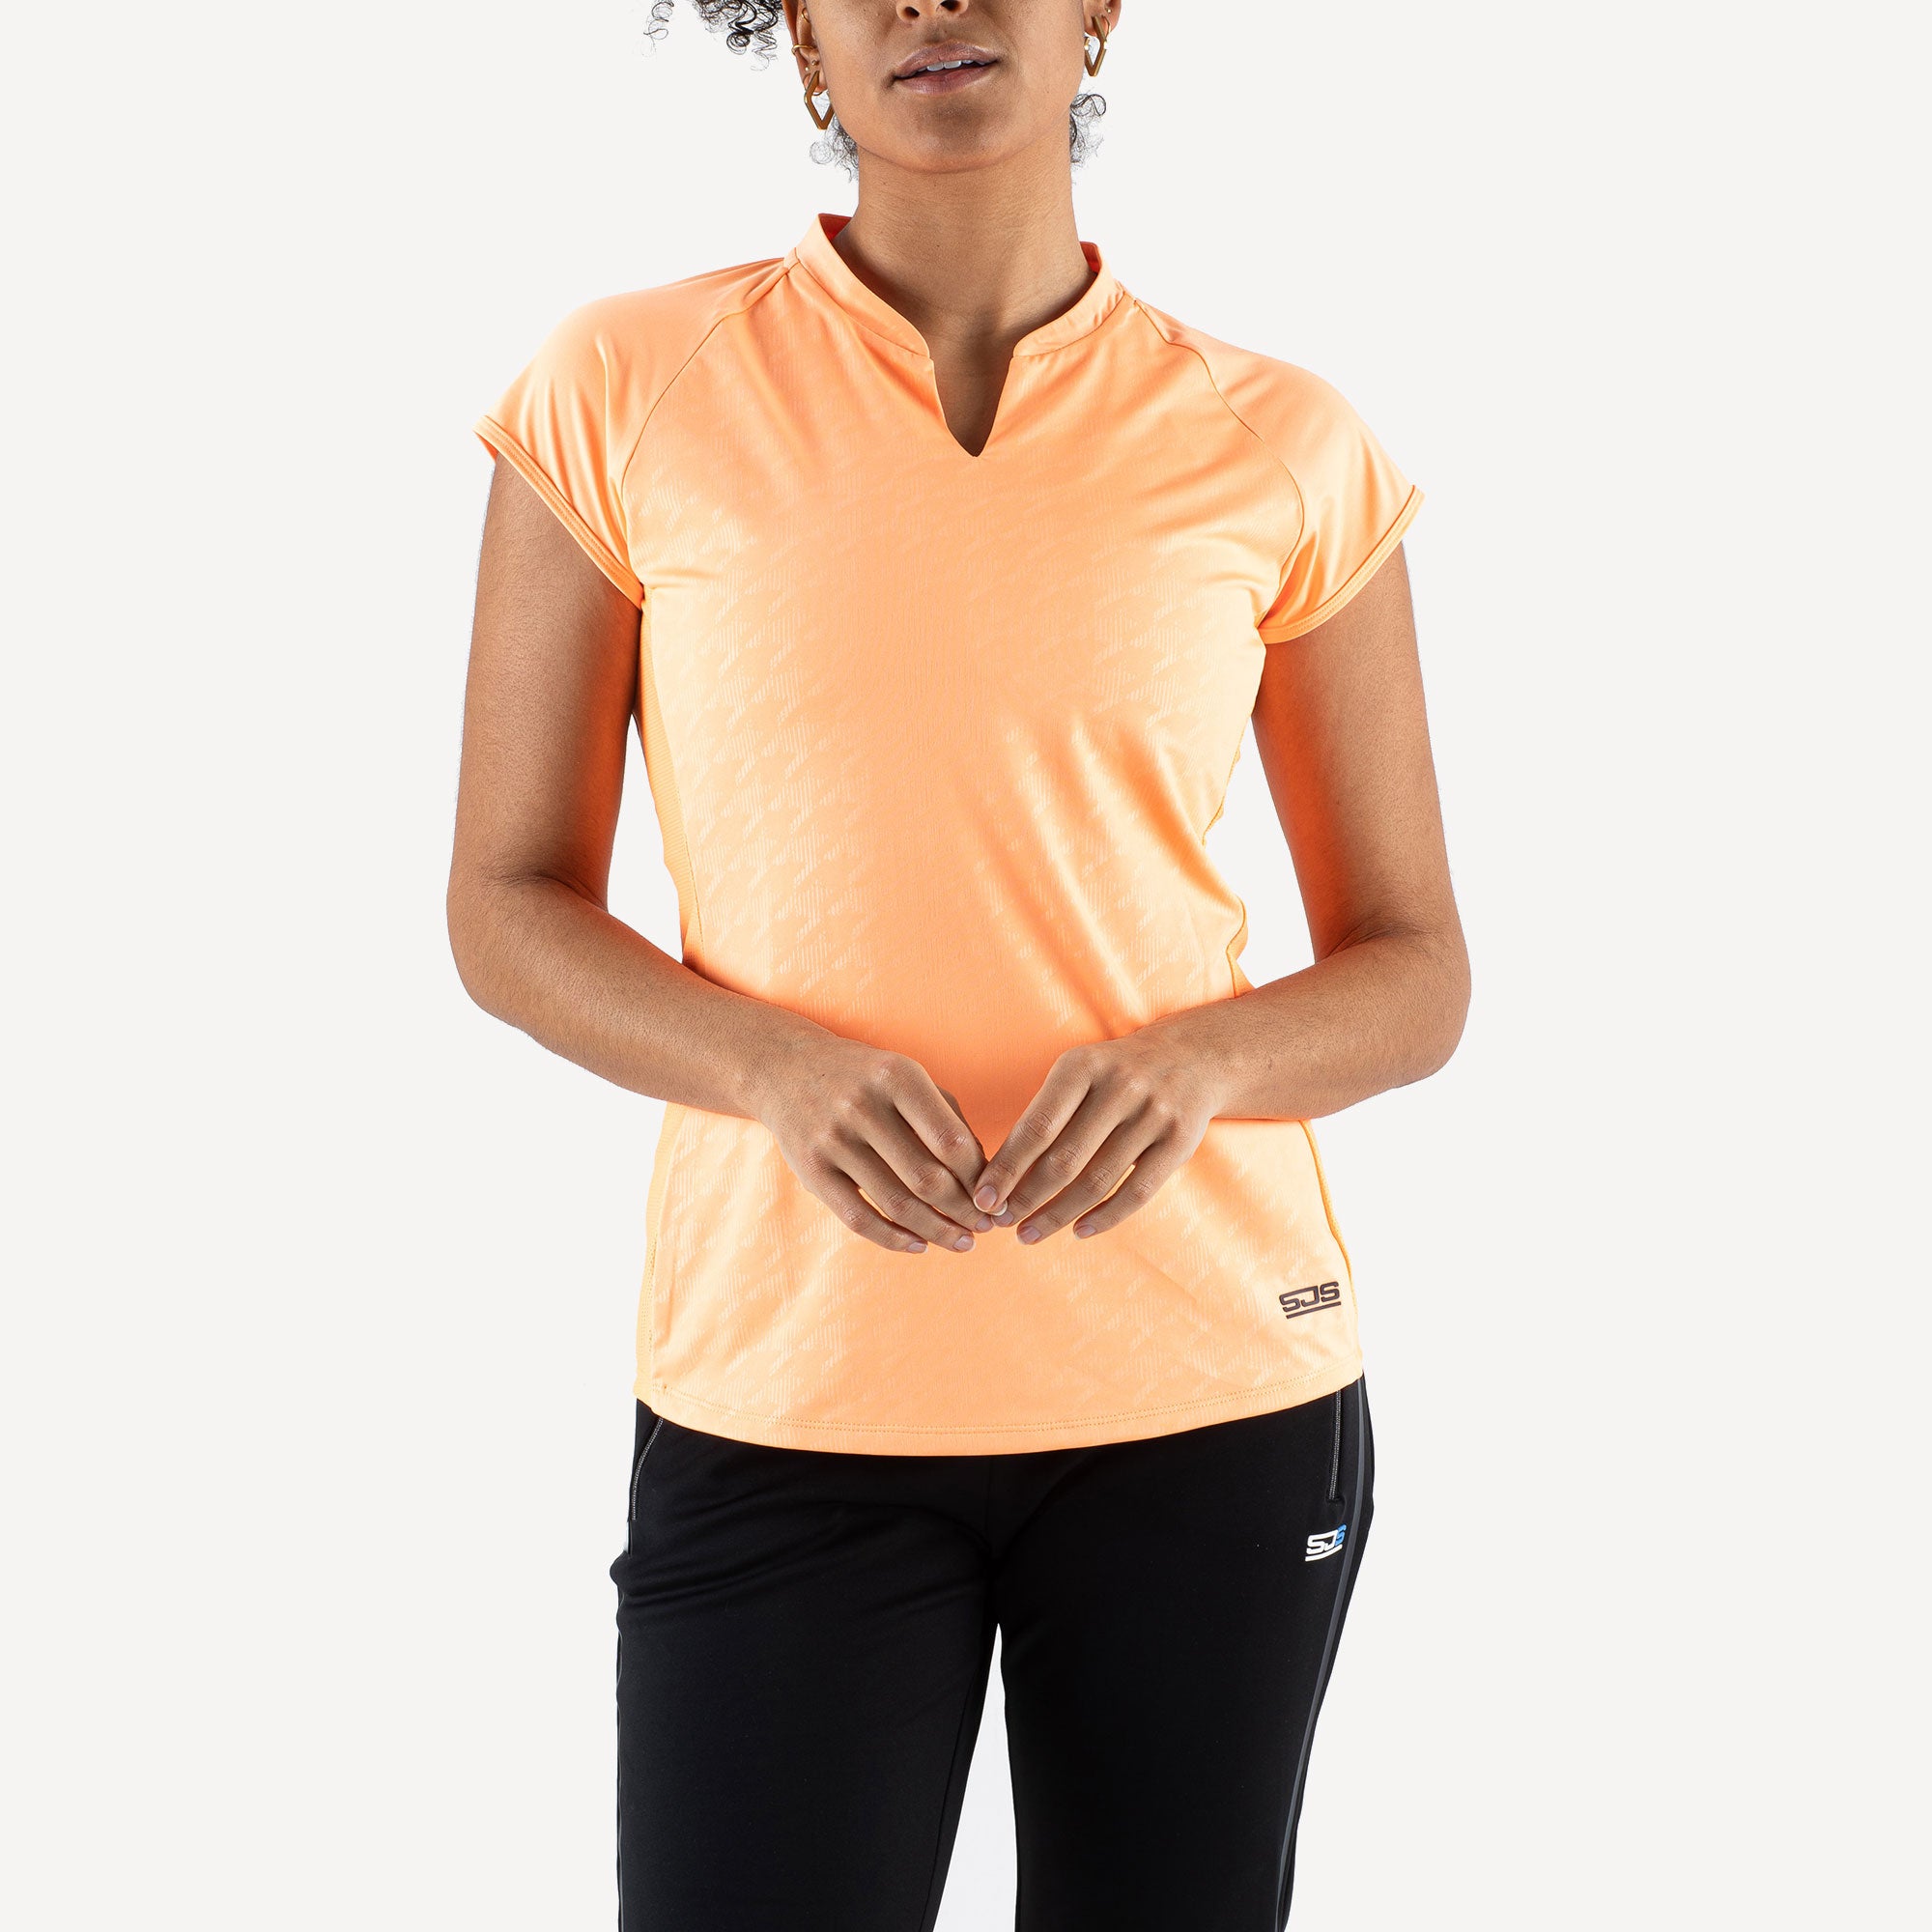 Sjeng Sports Honey Women's Tennis Shirt Orange (1)